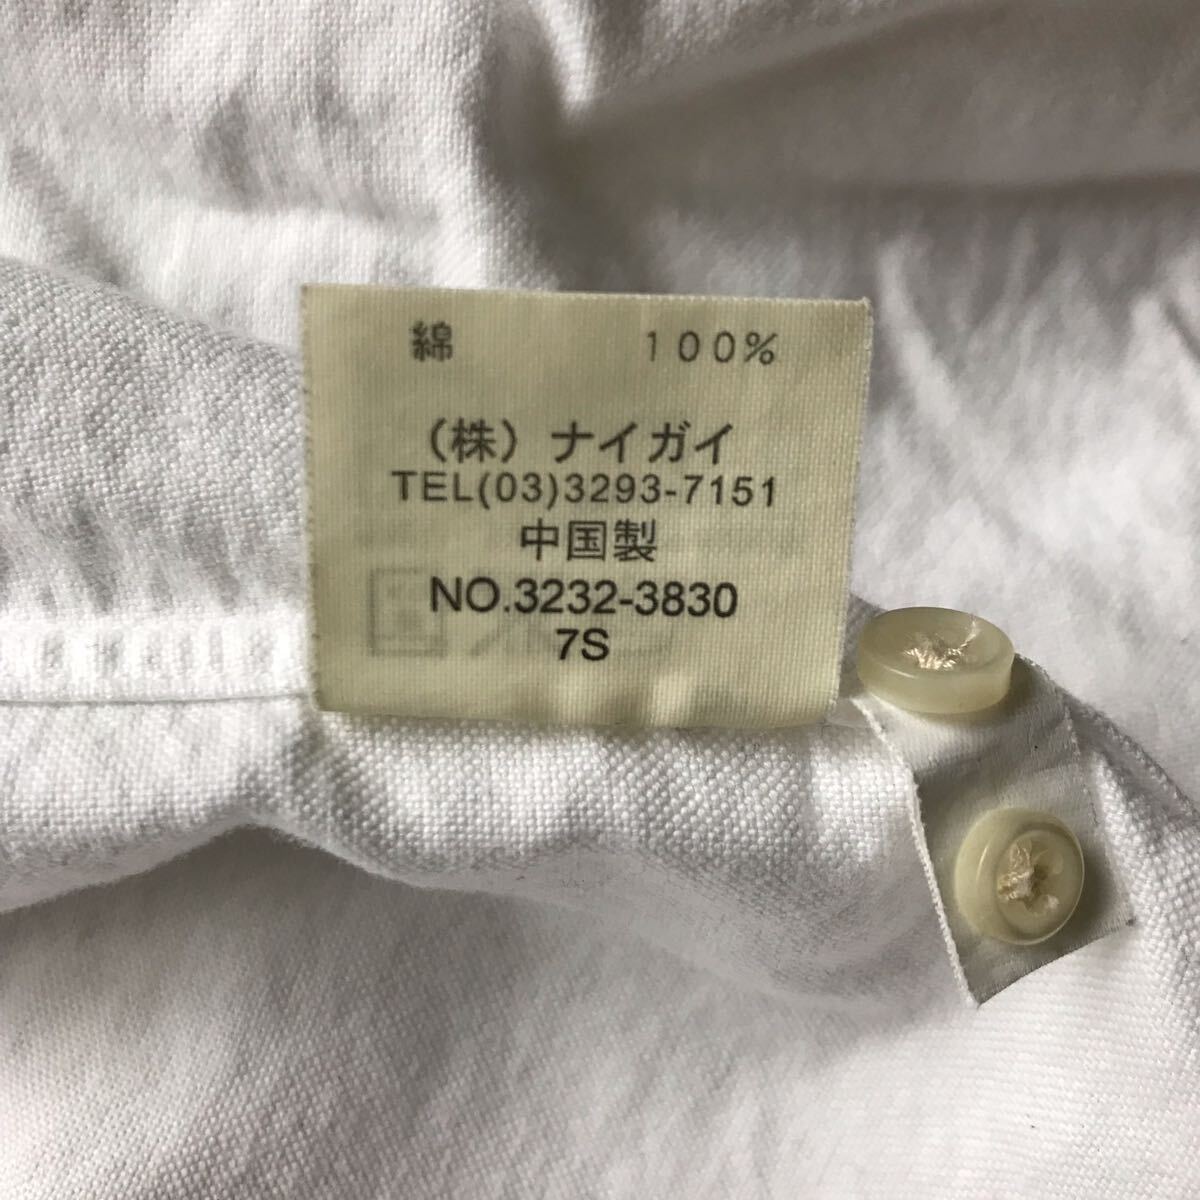  Ralph Lauren oxford shirt 028-1-324 white 130cm big po knee 